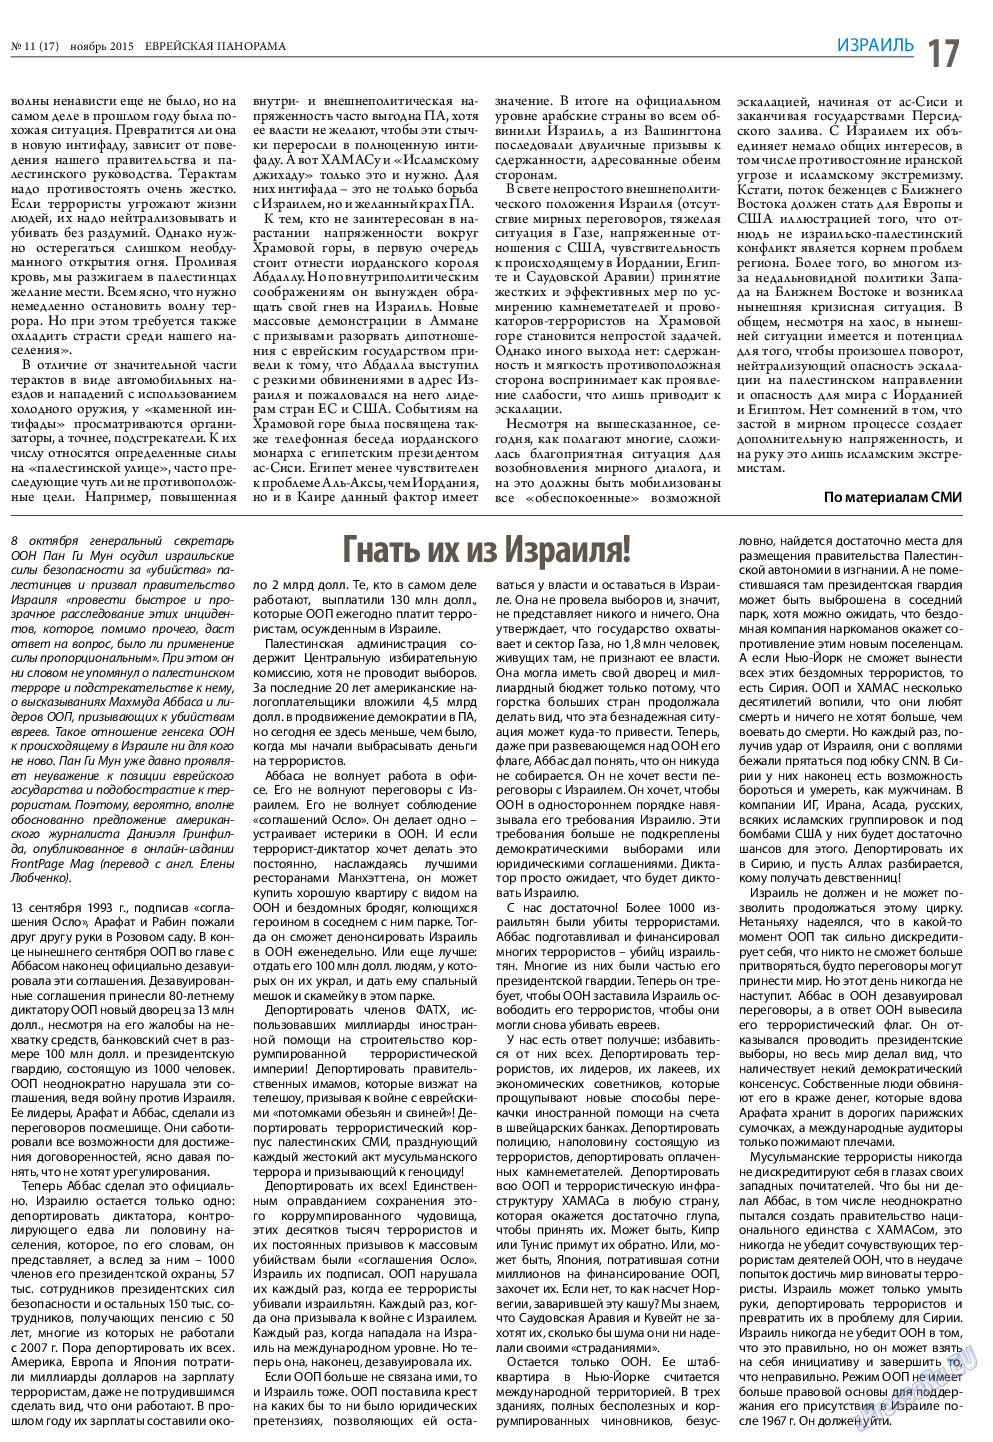 Еврейская панорама, газета. 2015 №11 стр.17